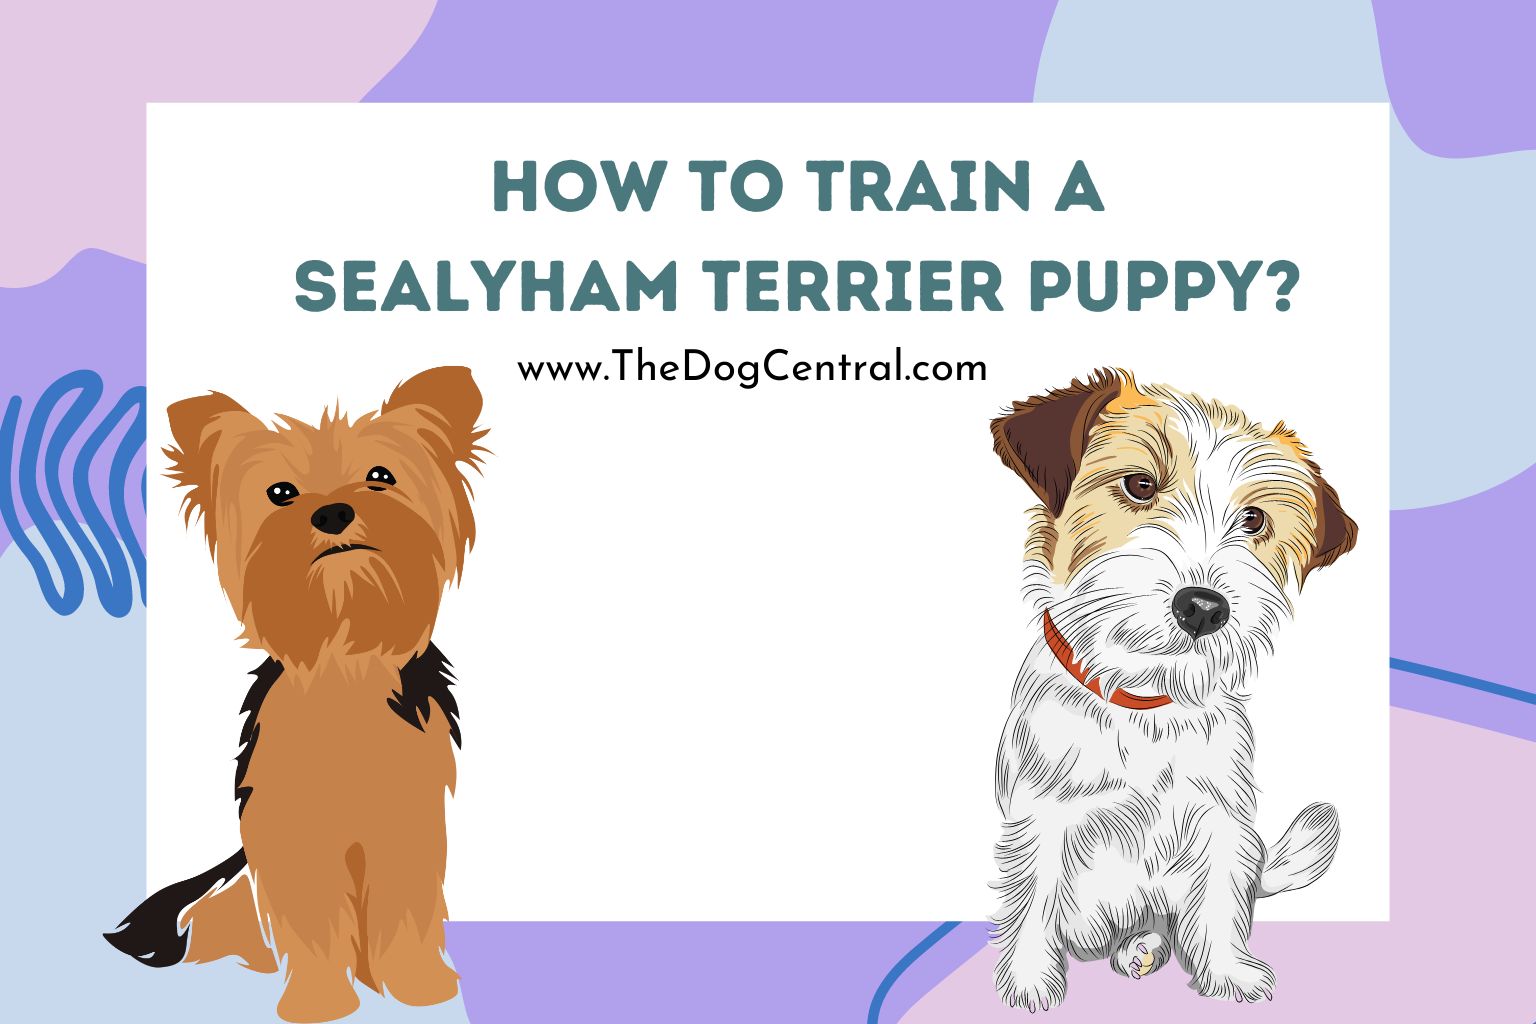 How to Train a Sealyham Terrier Puppy